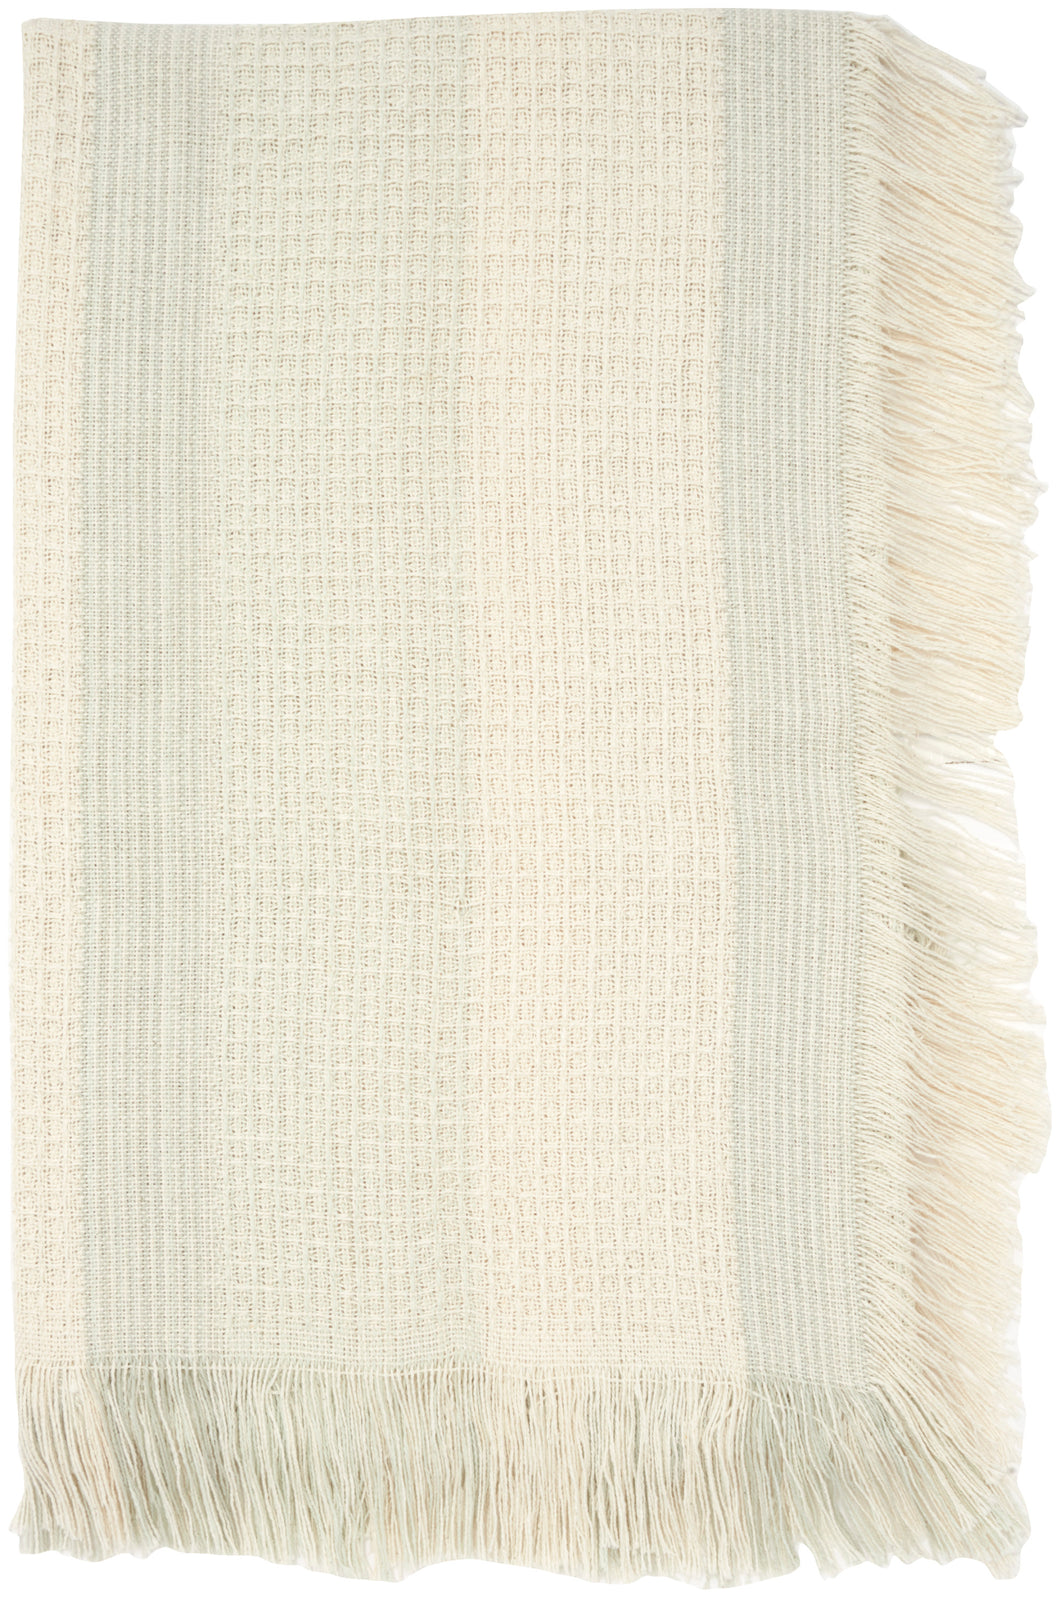 Mina Victory Cotton Spa Throw Blanket SH702 50